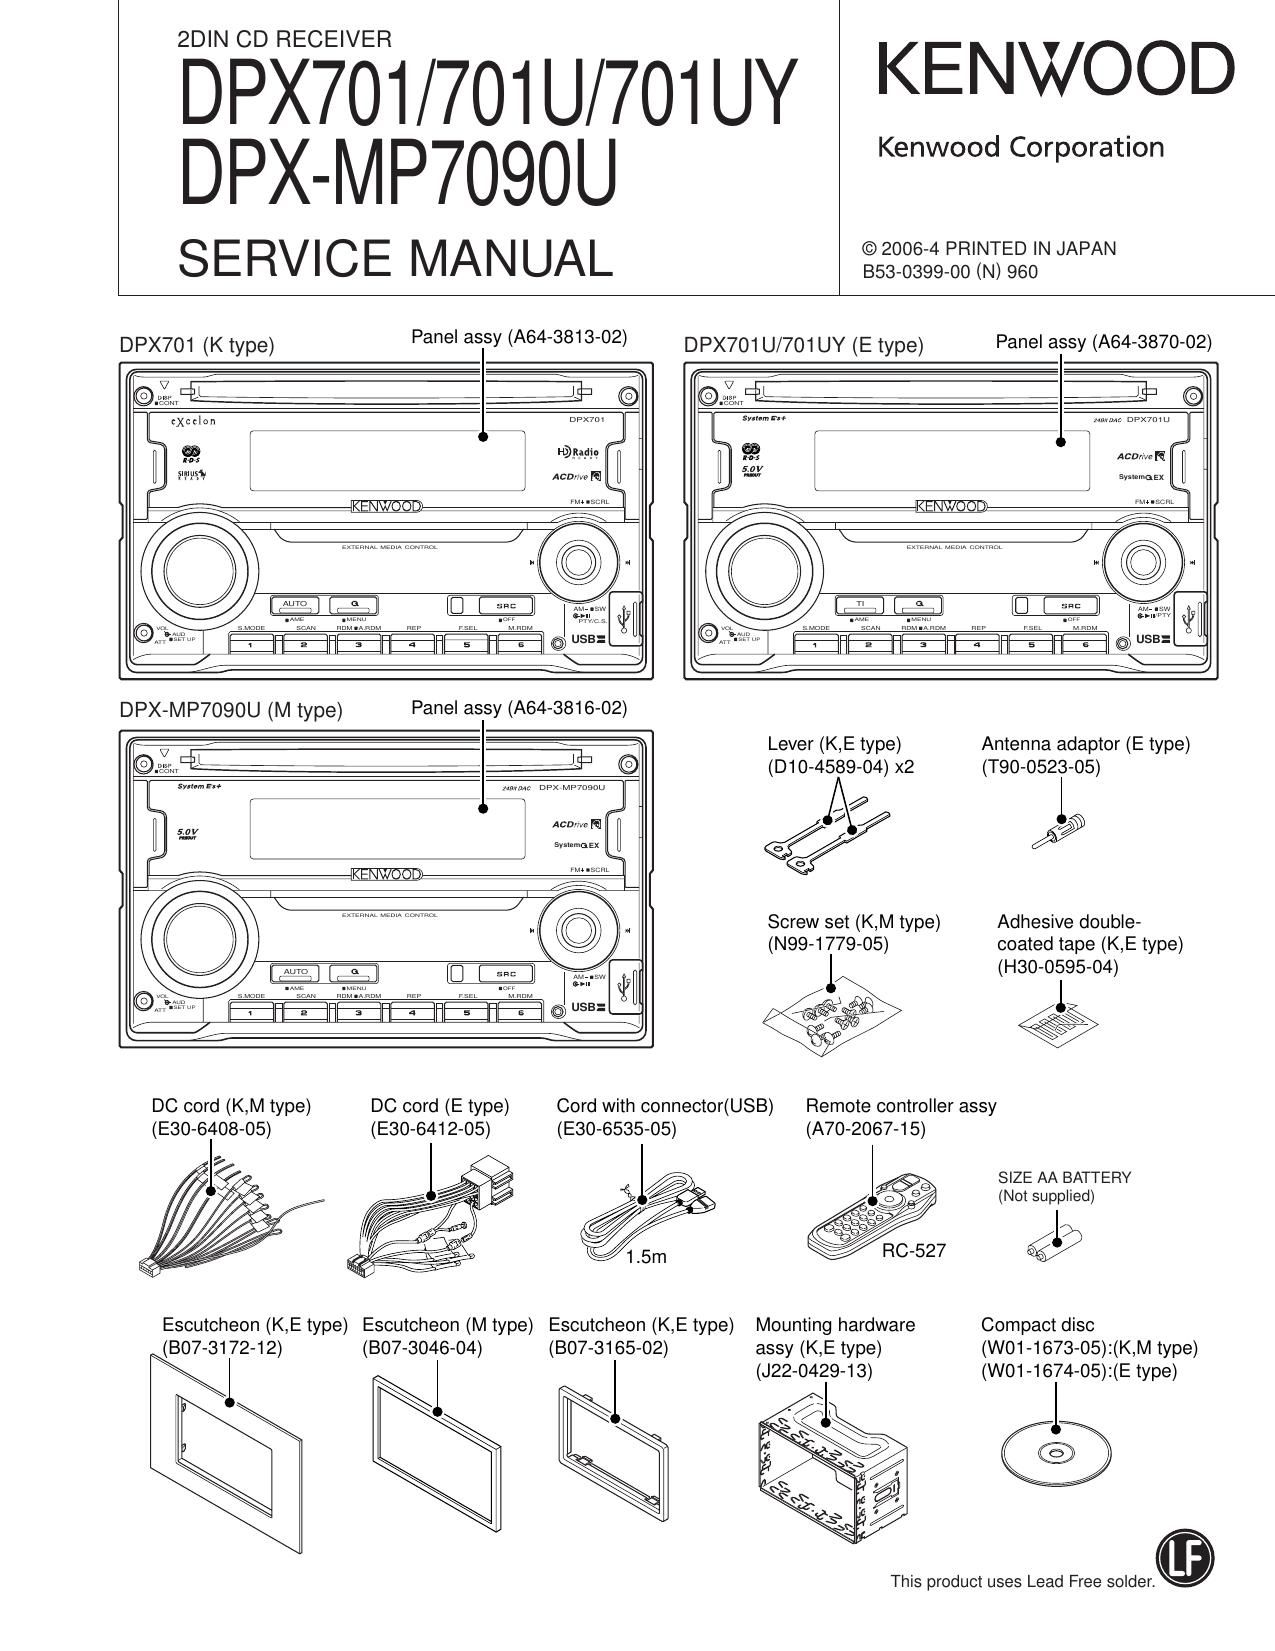 Kenwood DPX 701 UY Service Manual